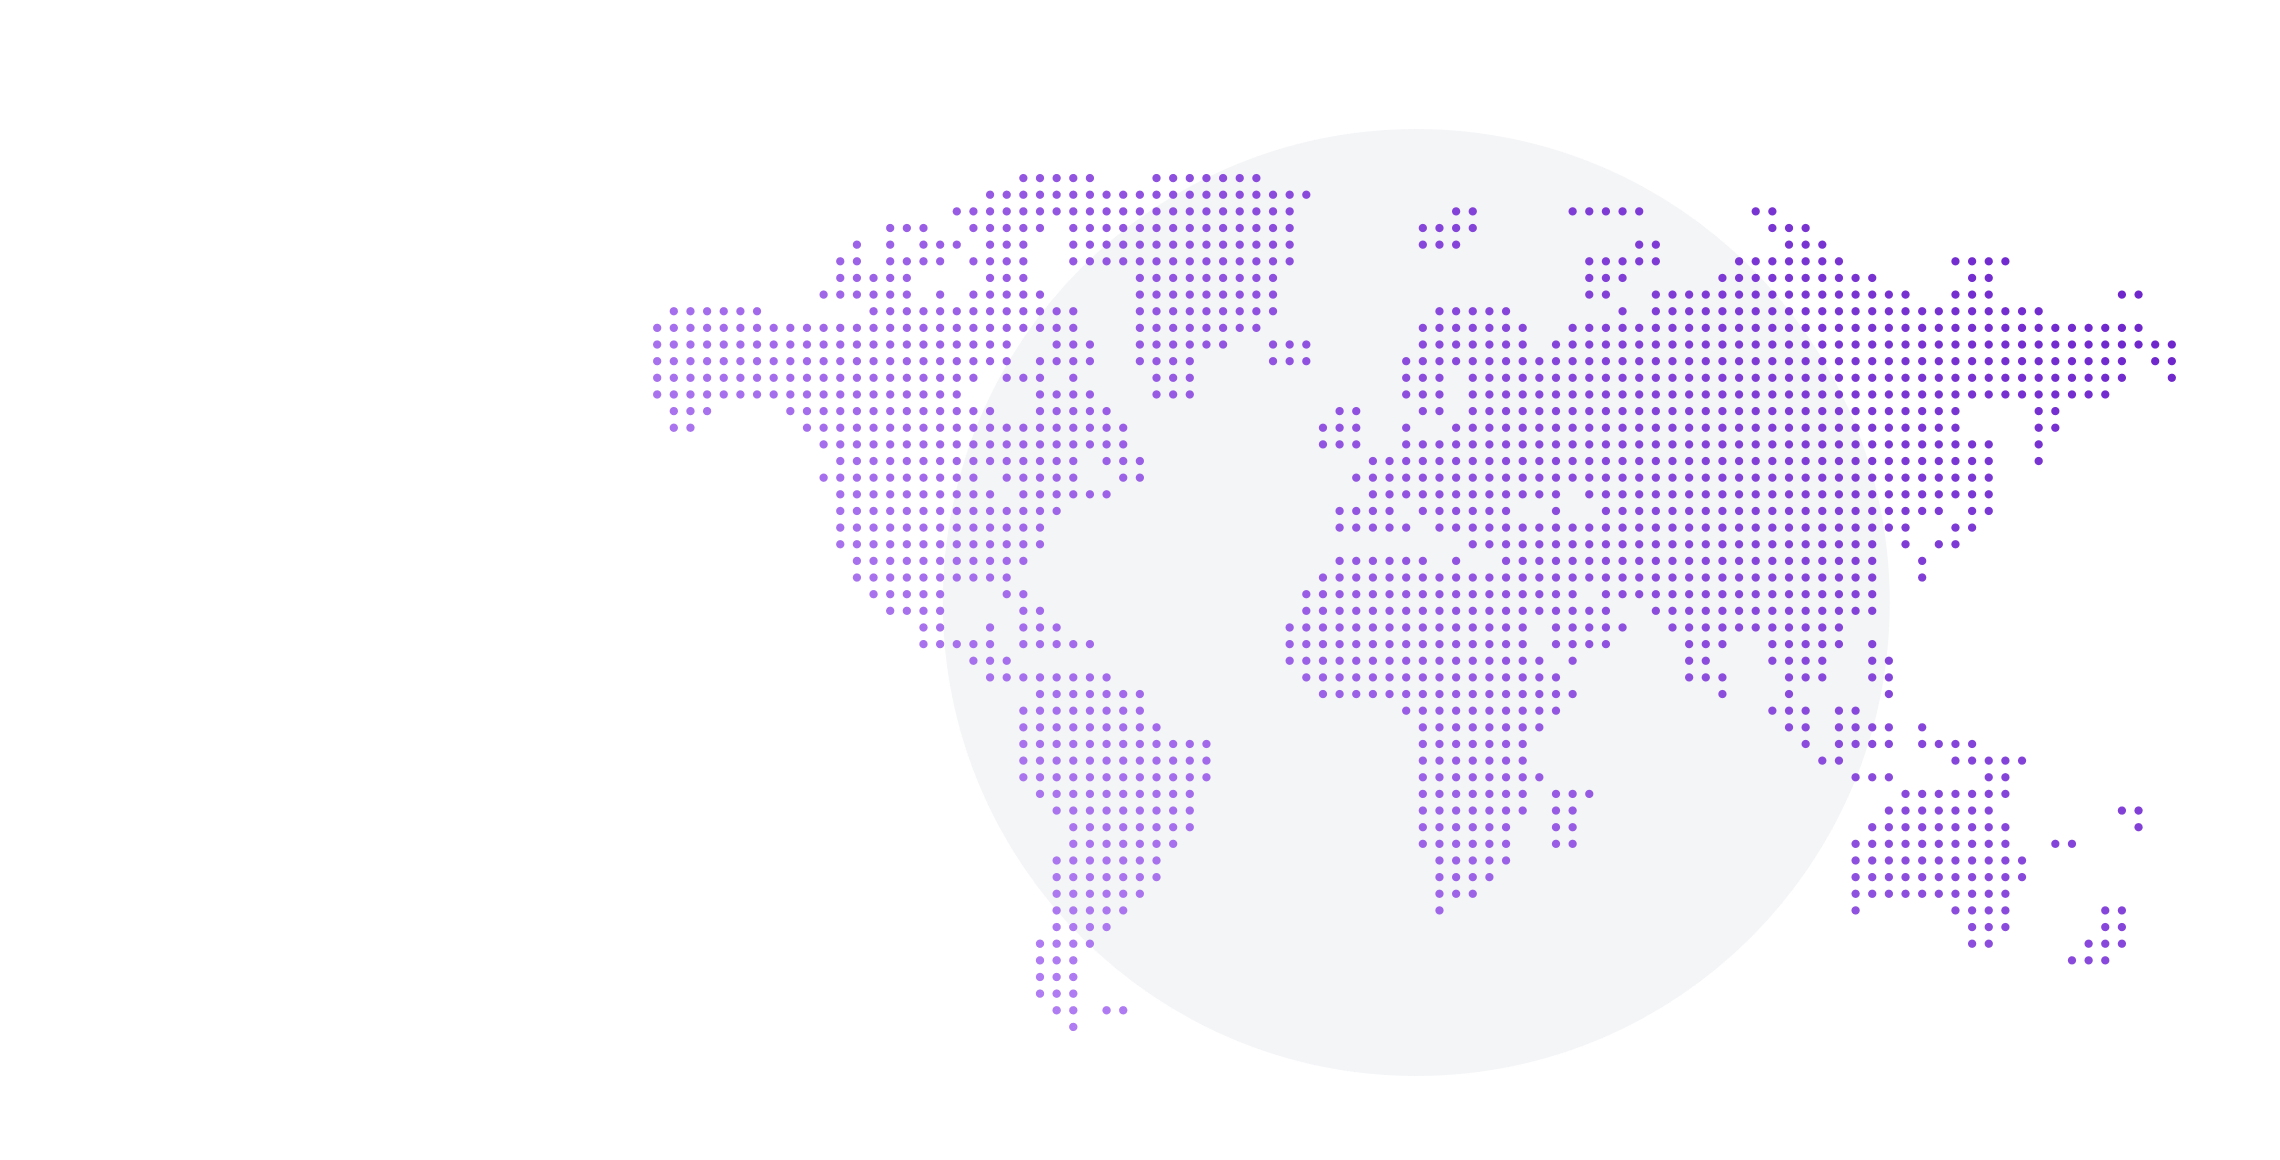 Global Communications Network Map